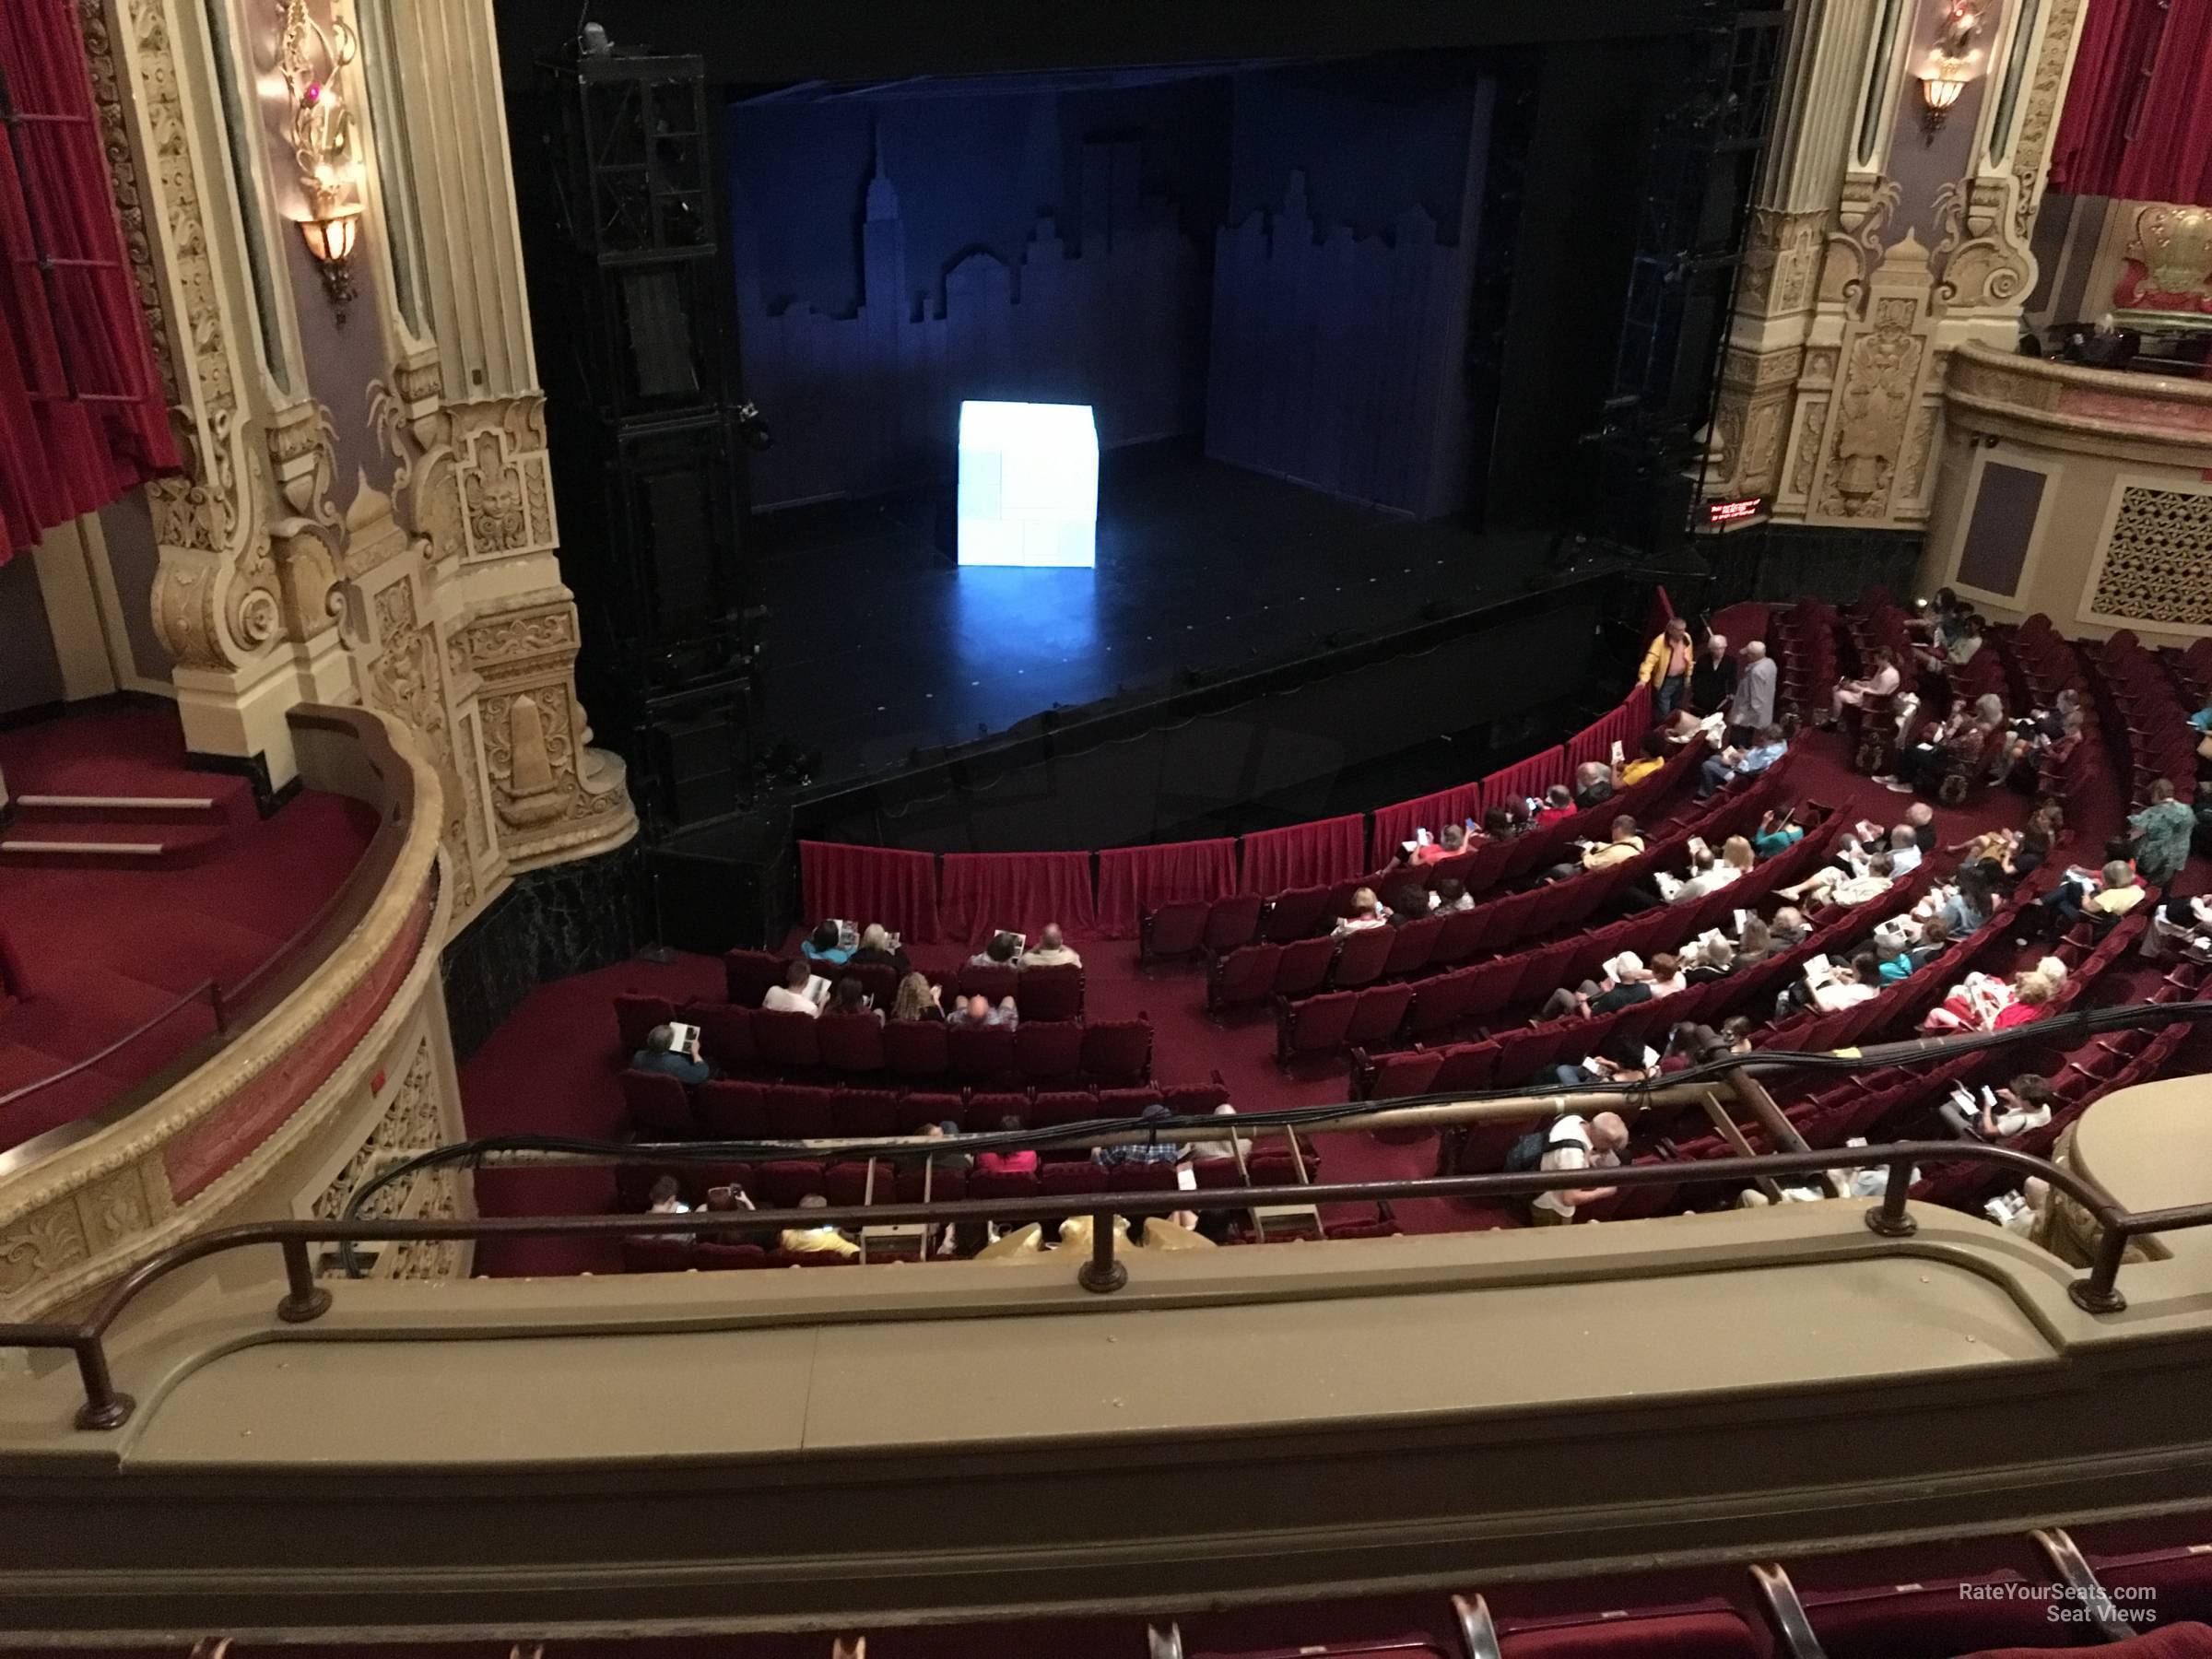 loge left, row d seat view  - nederlander theatre (chicago)